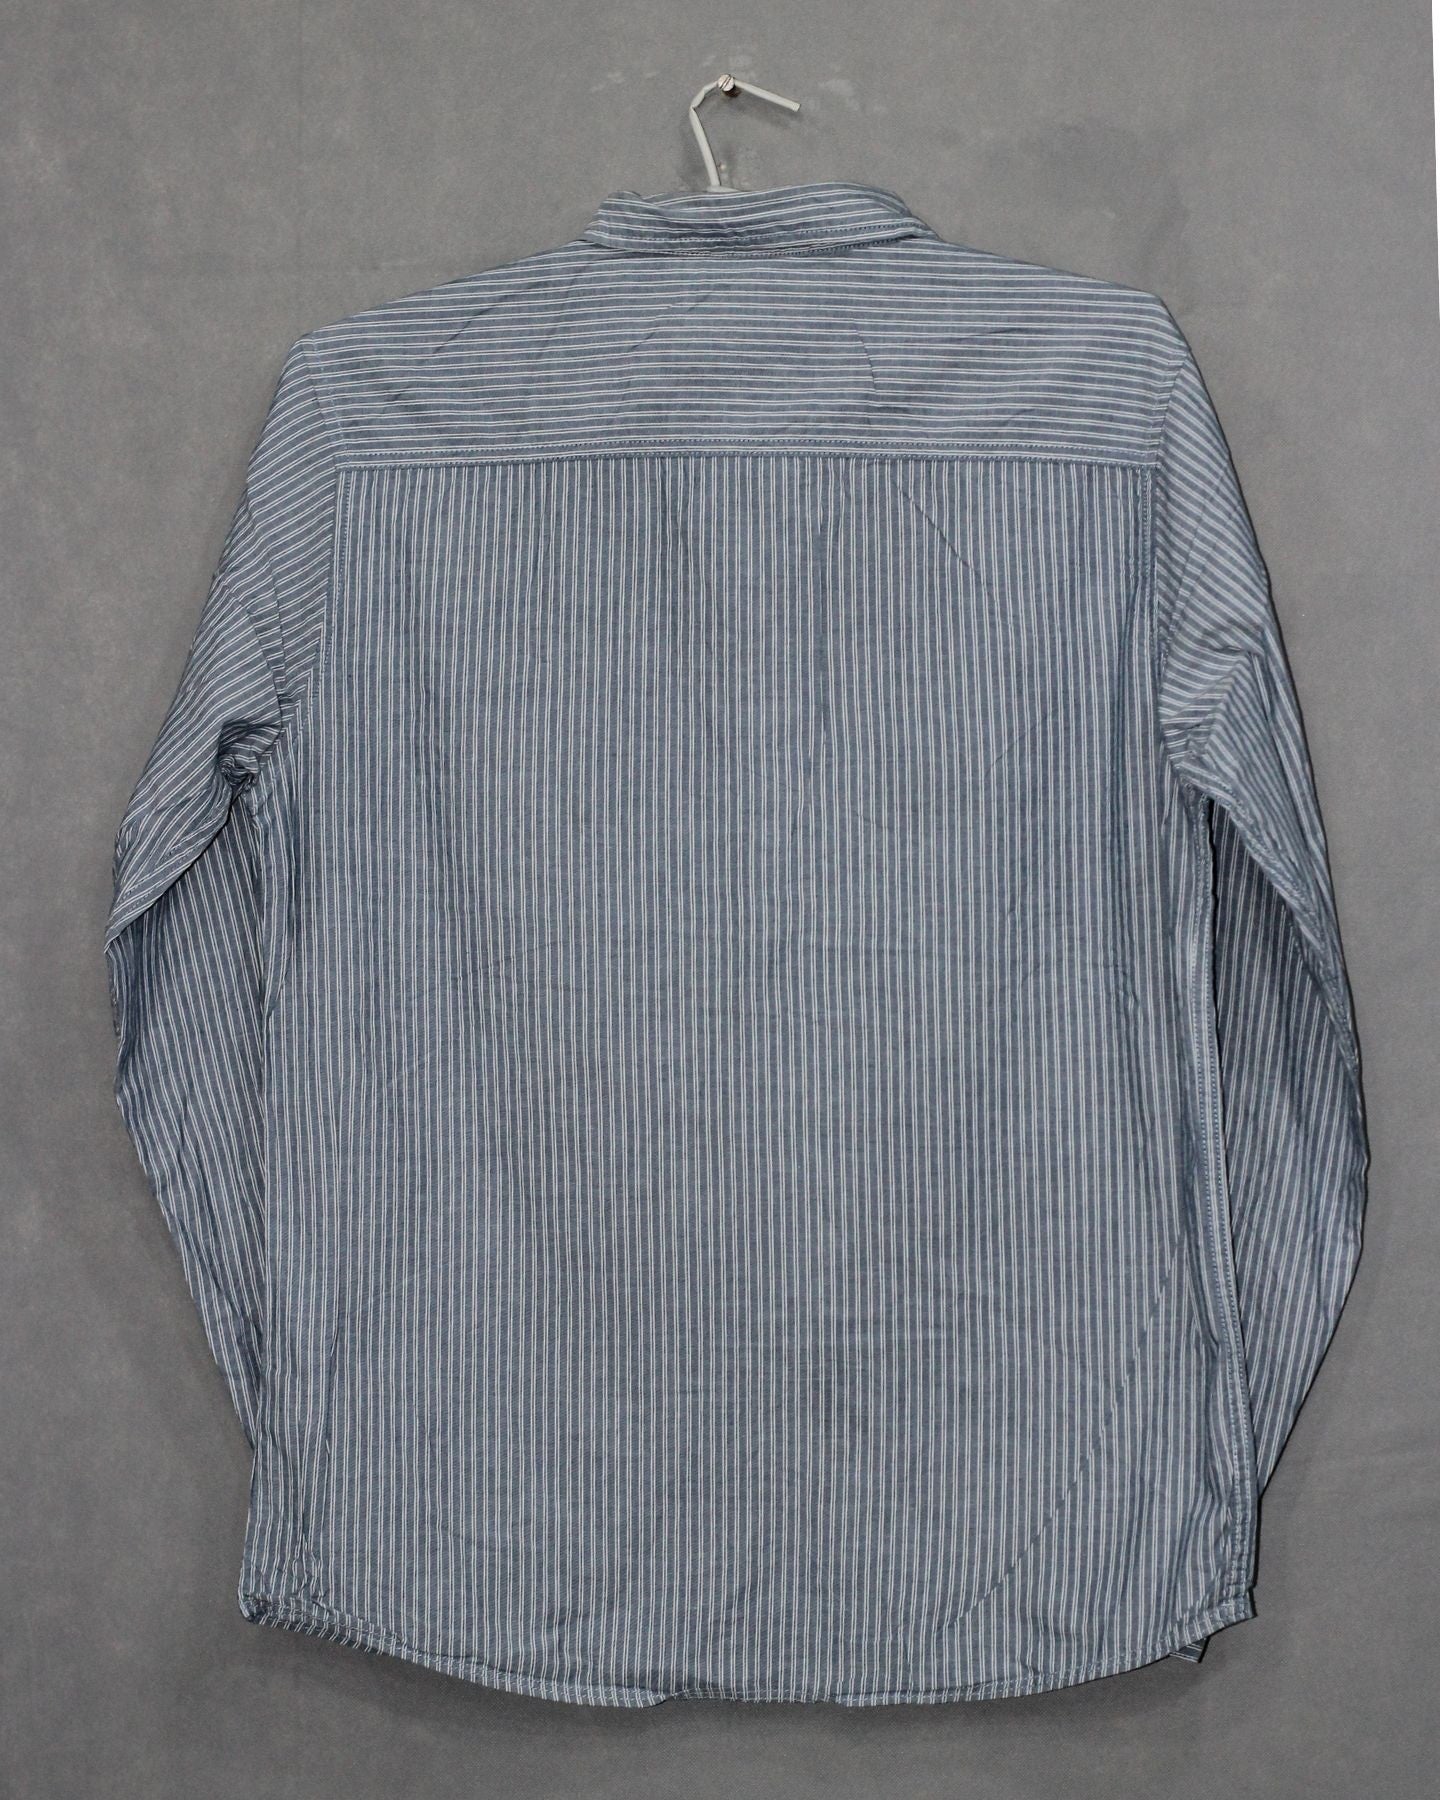 Cedar Wood State Branded Original Cotton Shirt For Men